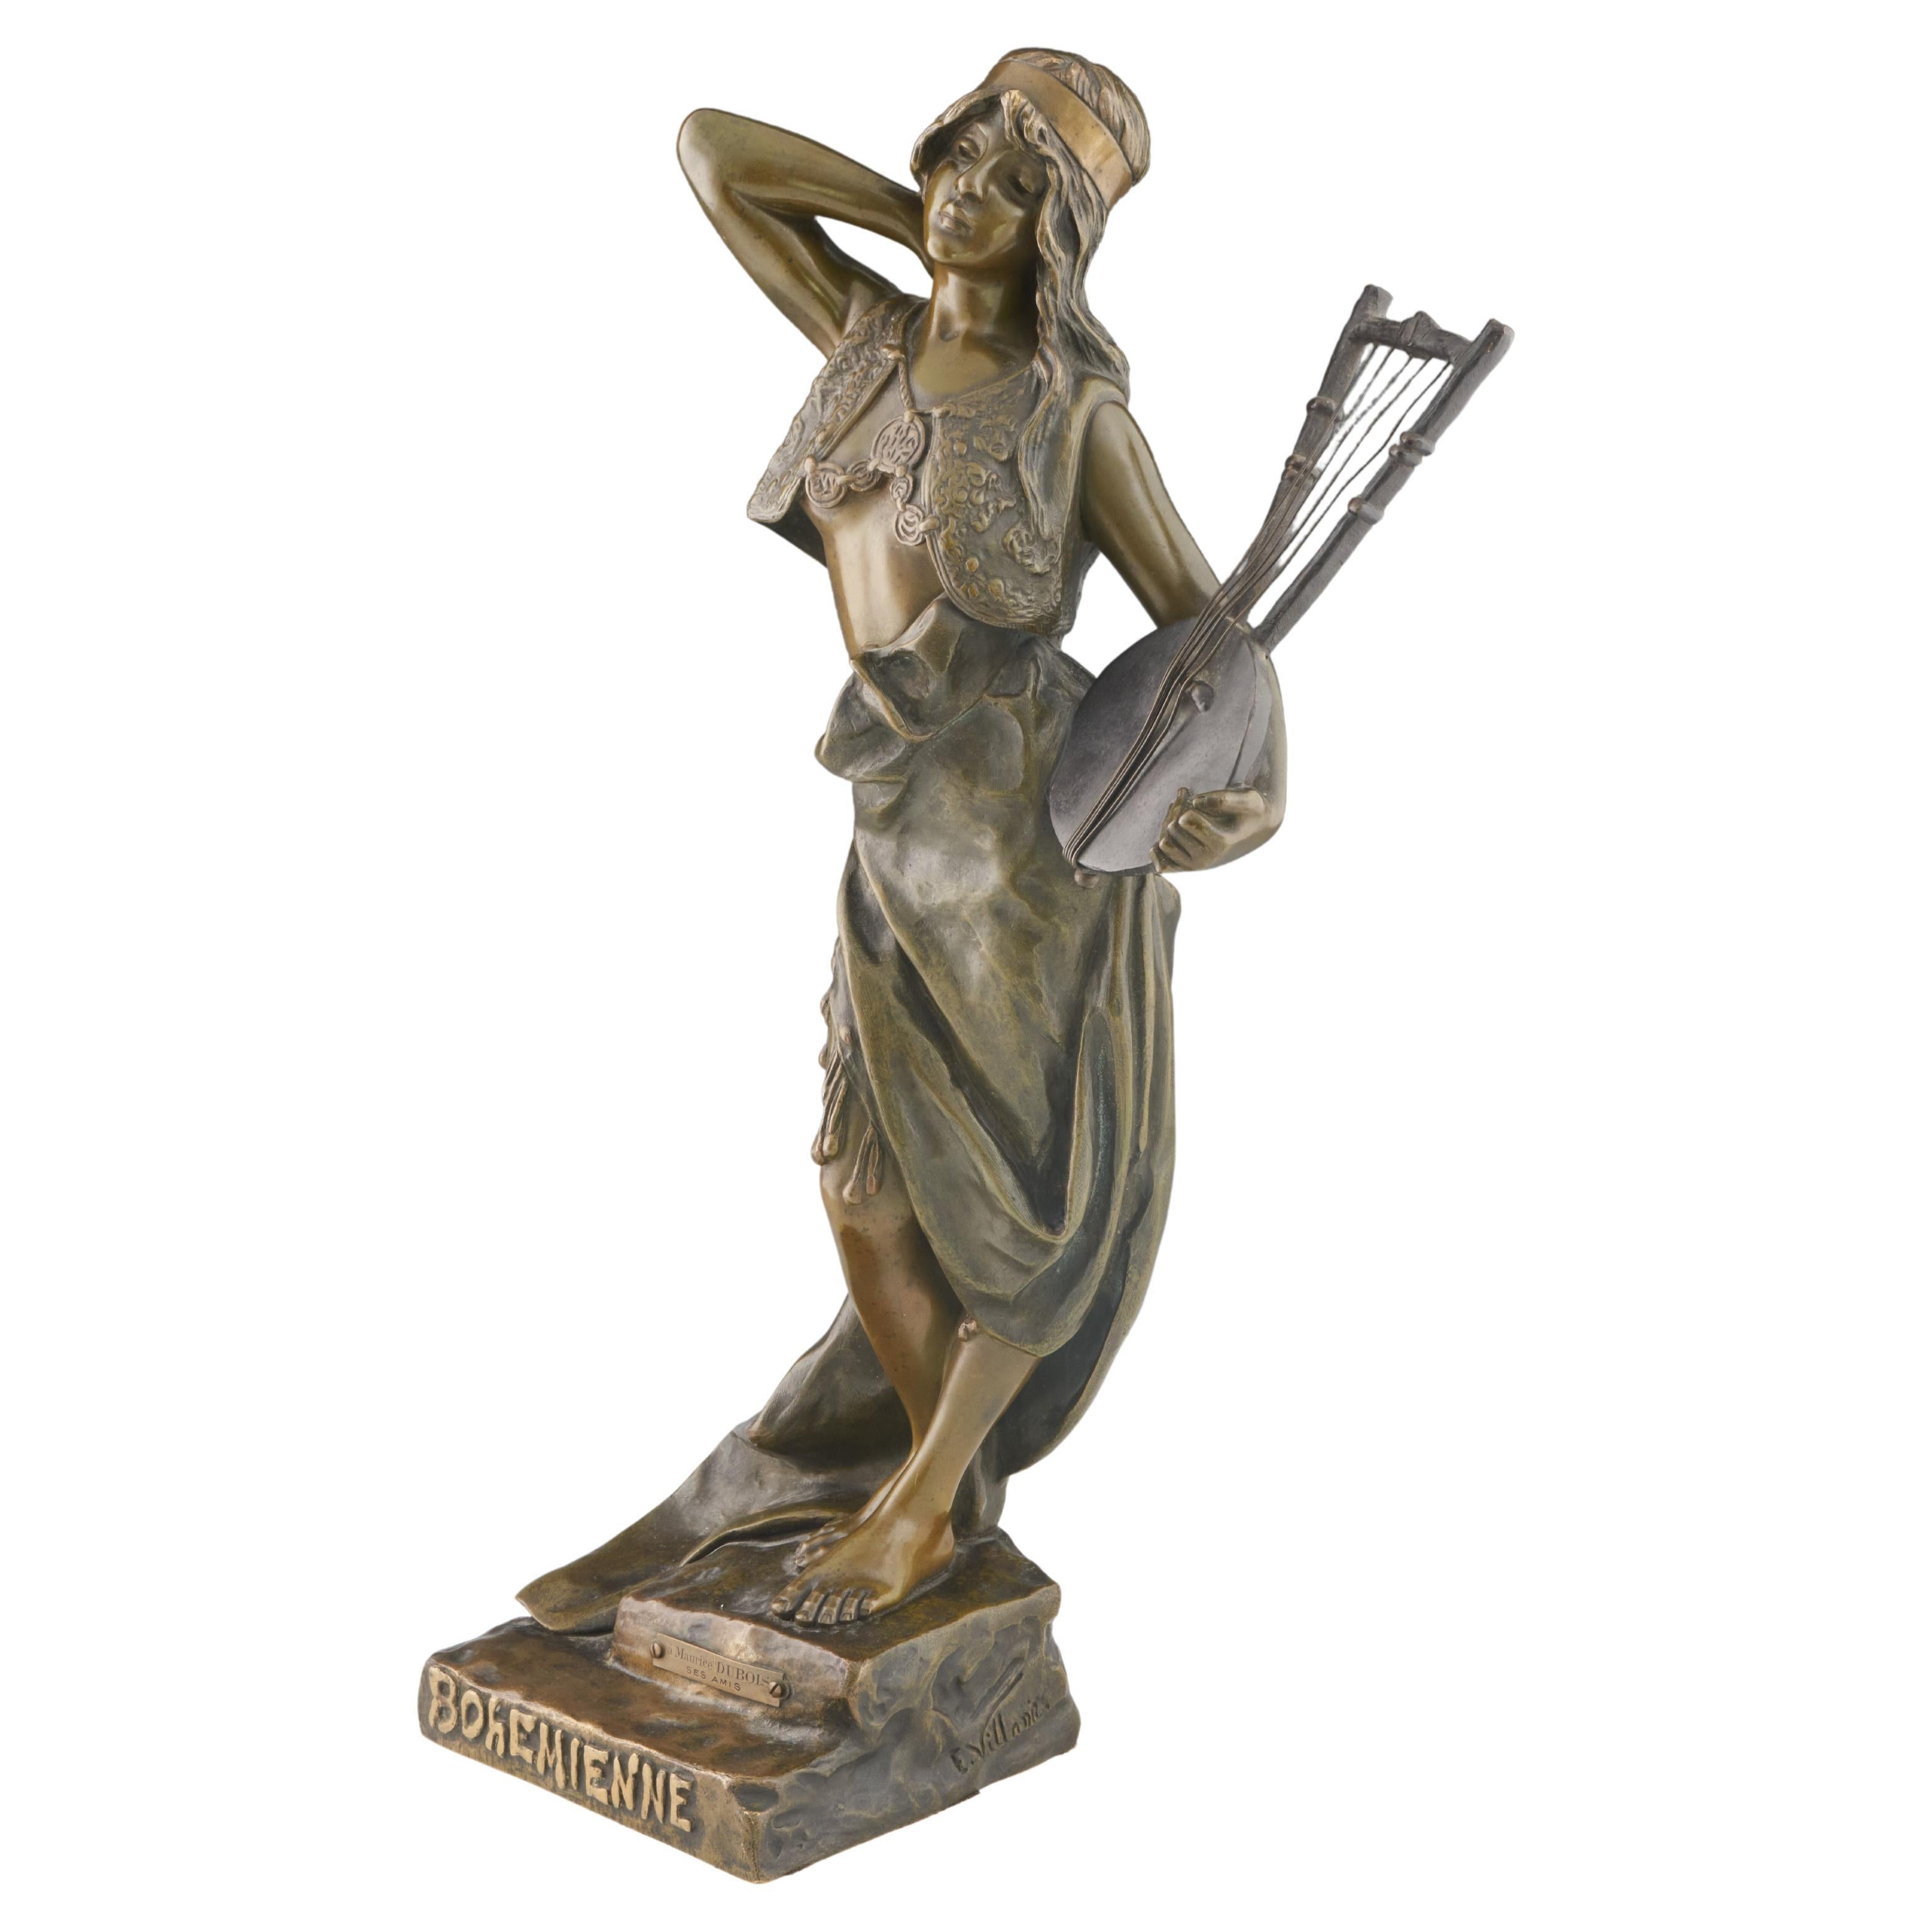 Jugendstil-Bronzeskulptur „Bohemienne“ von Emmanuel Villanis, um 1890